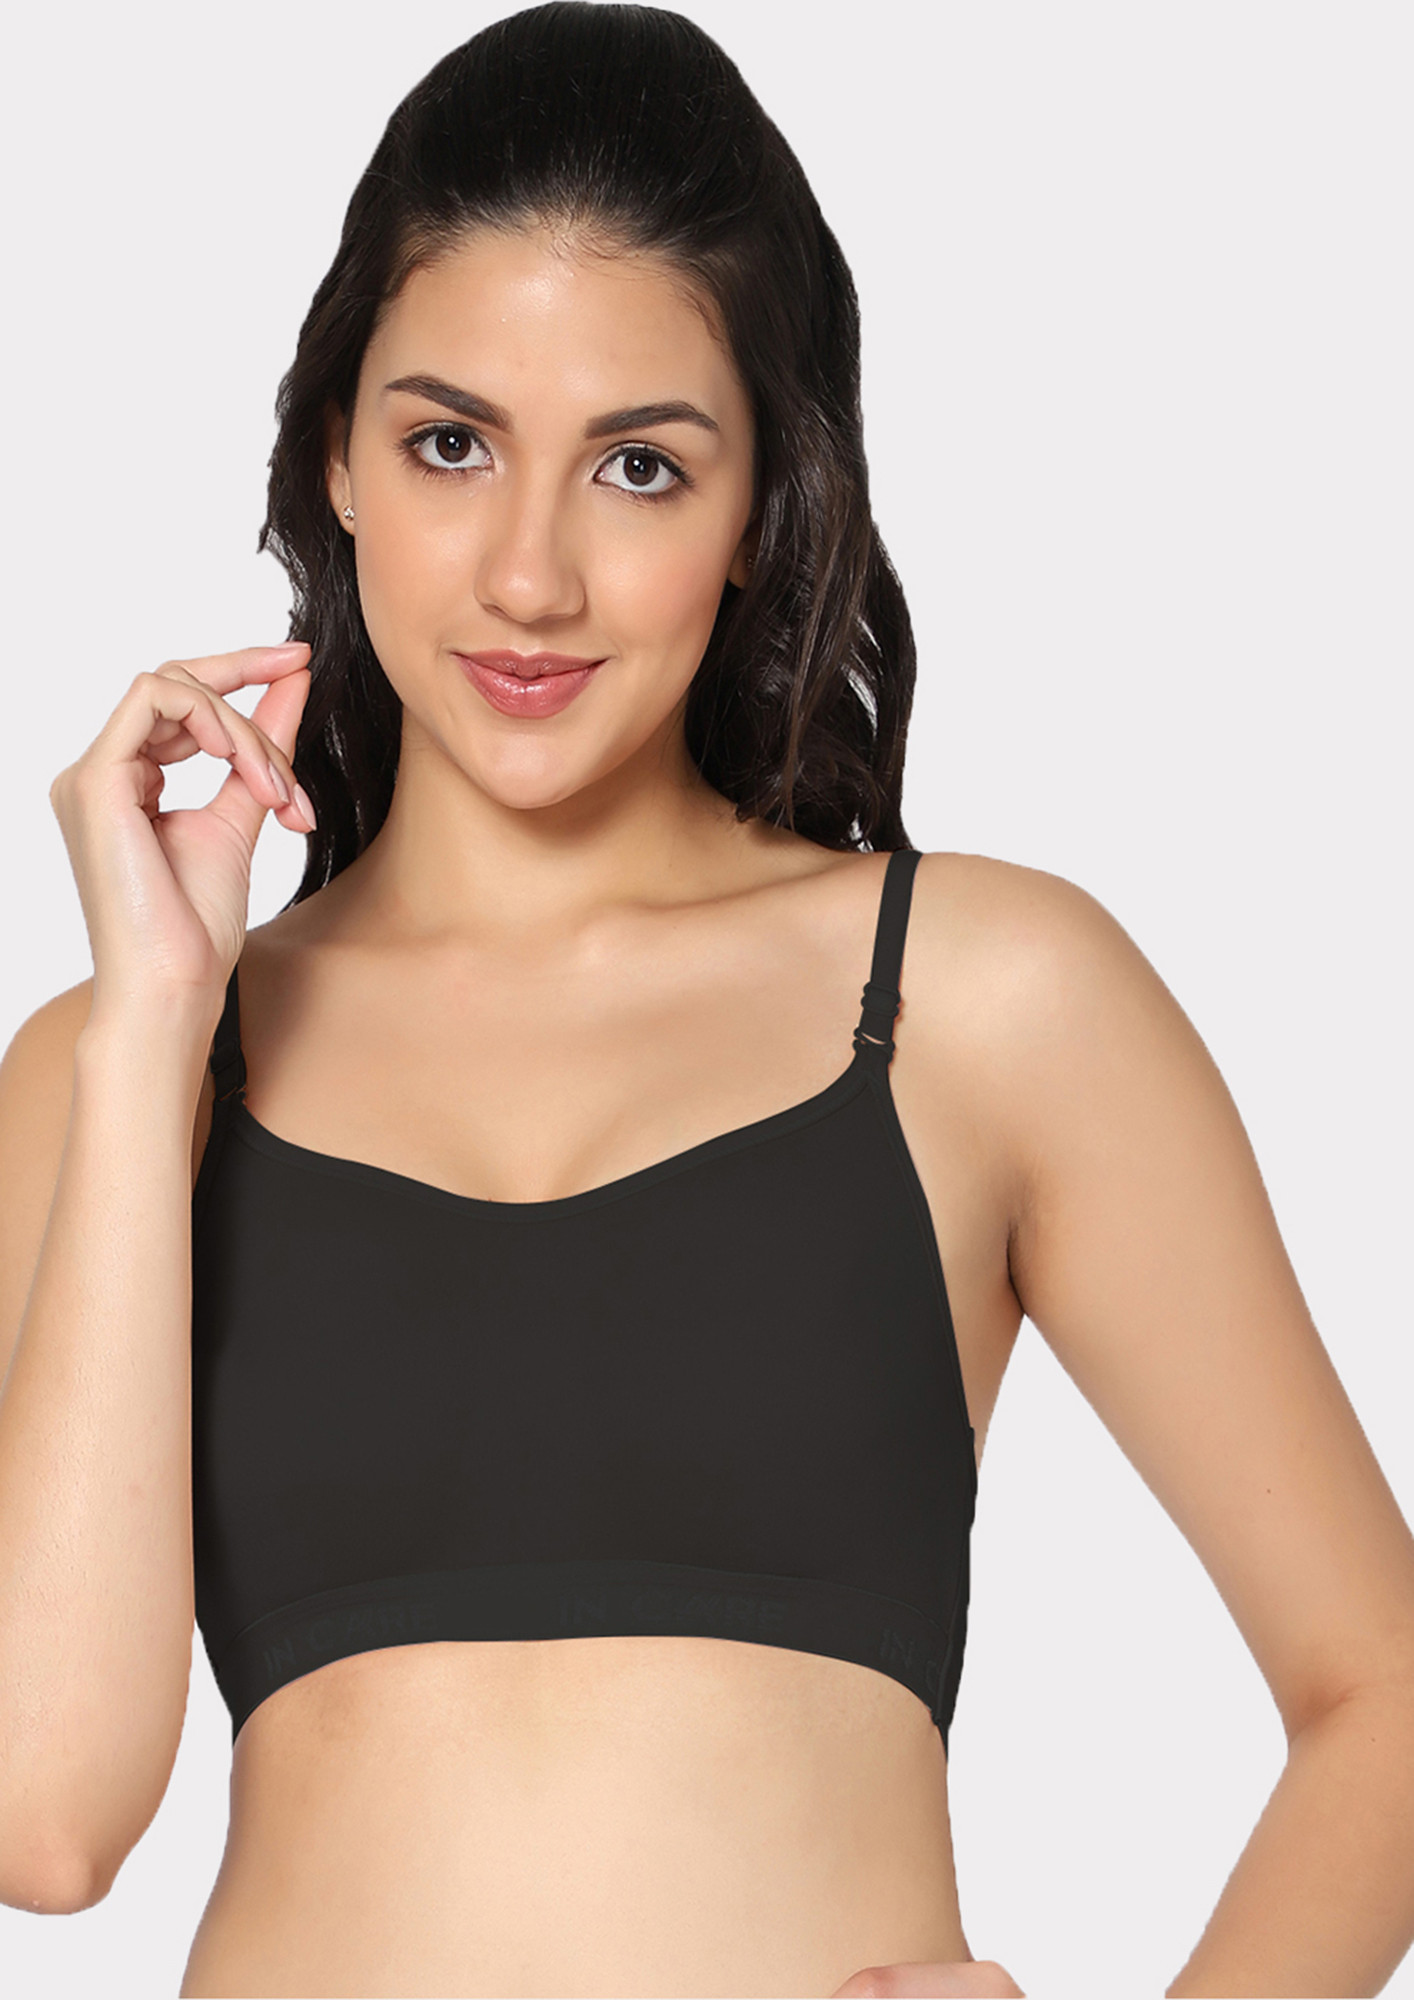 Buy Lively black sports bra for Women Online in India